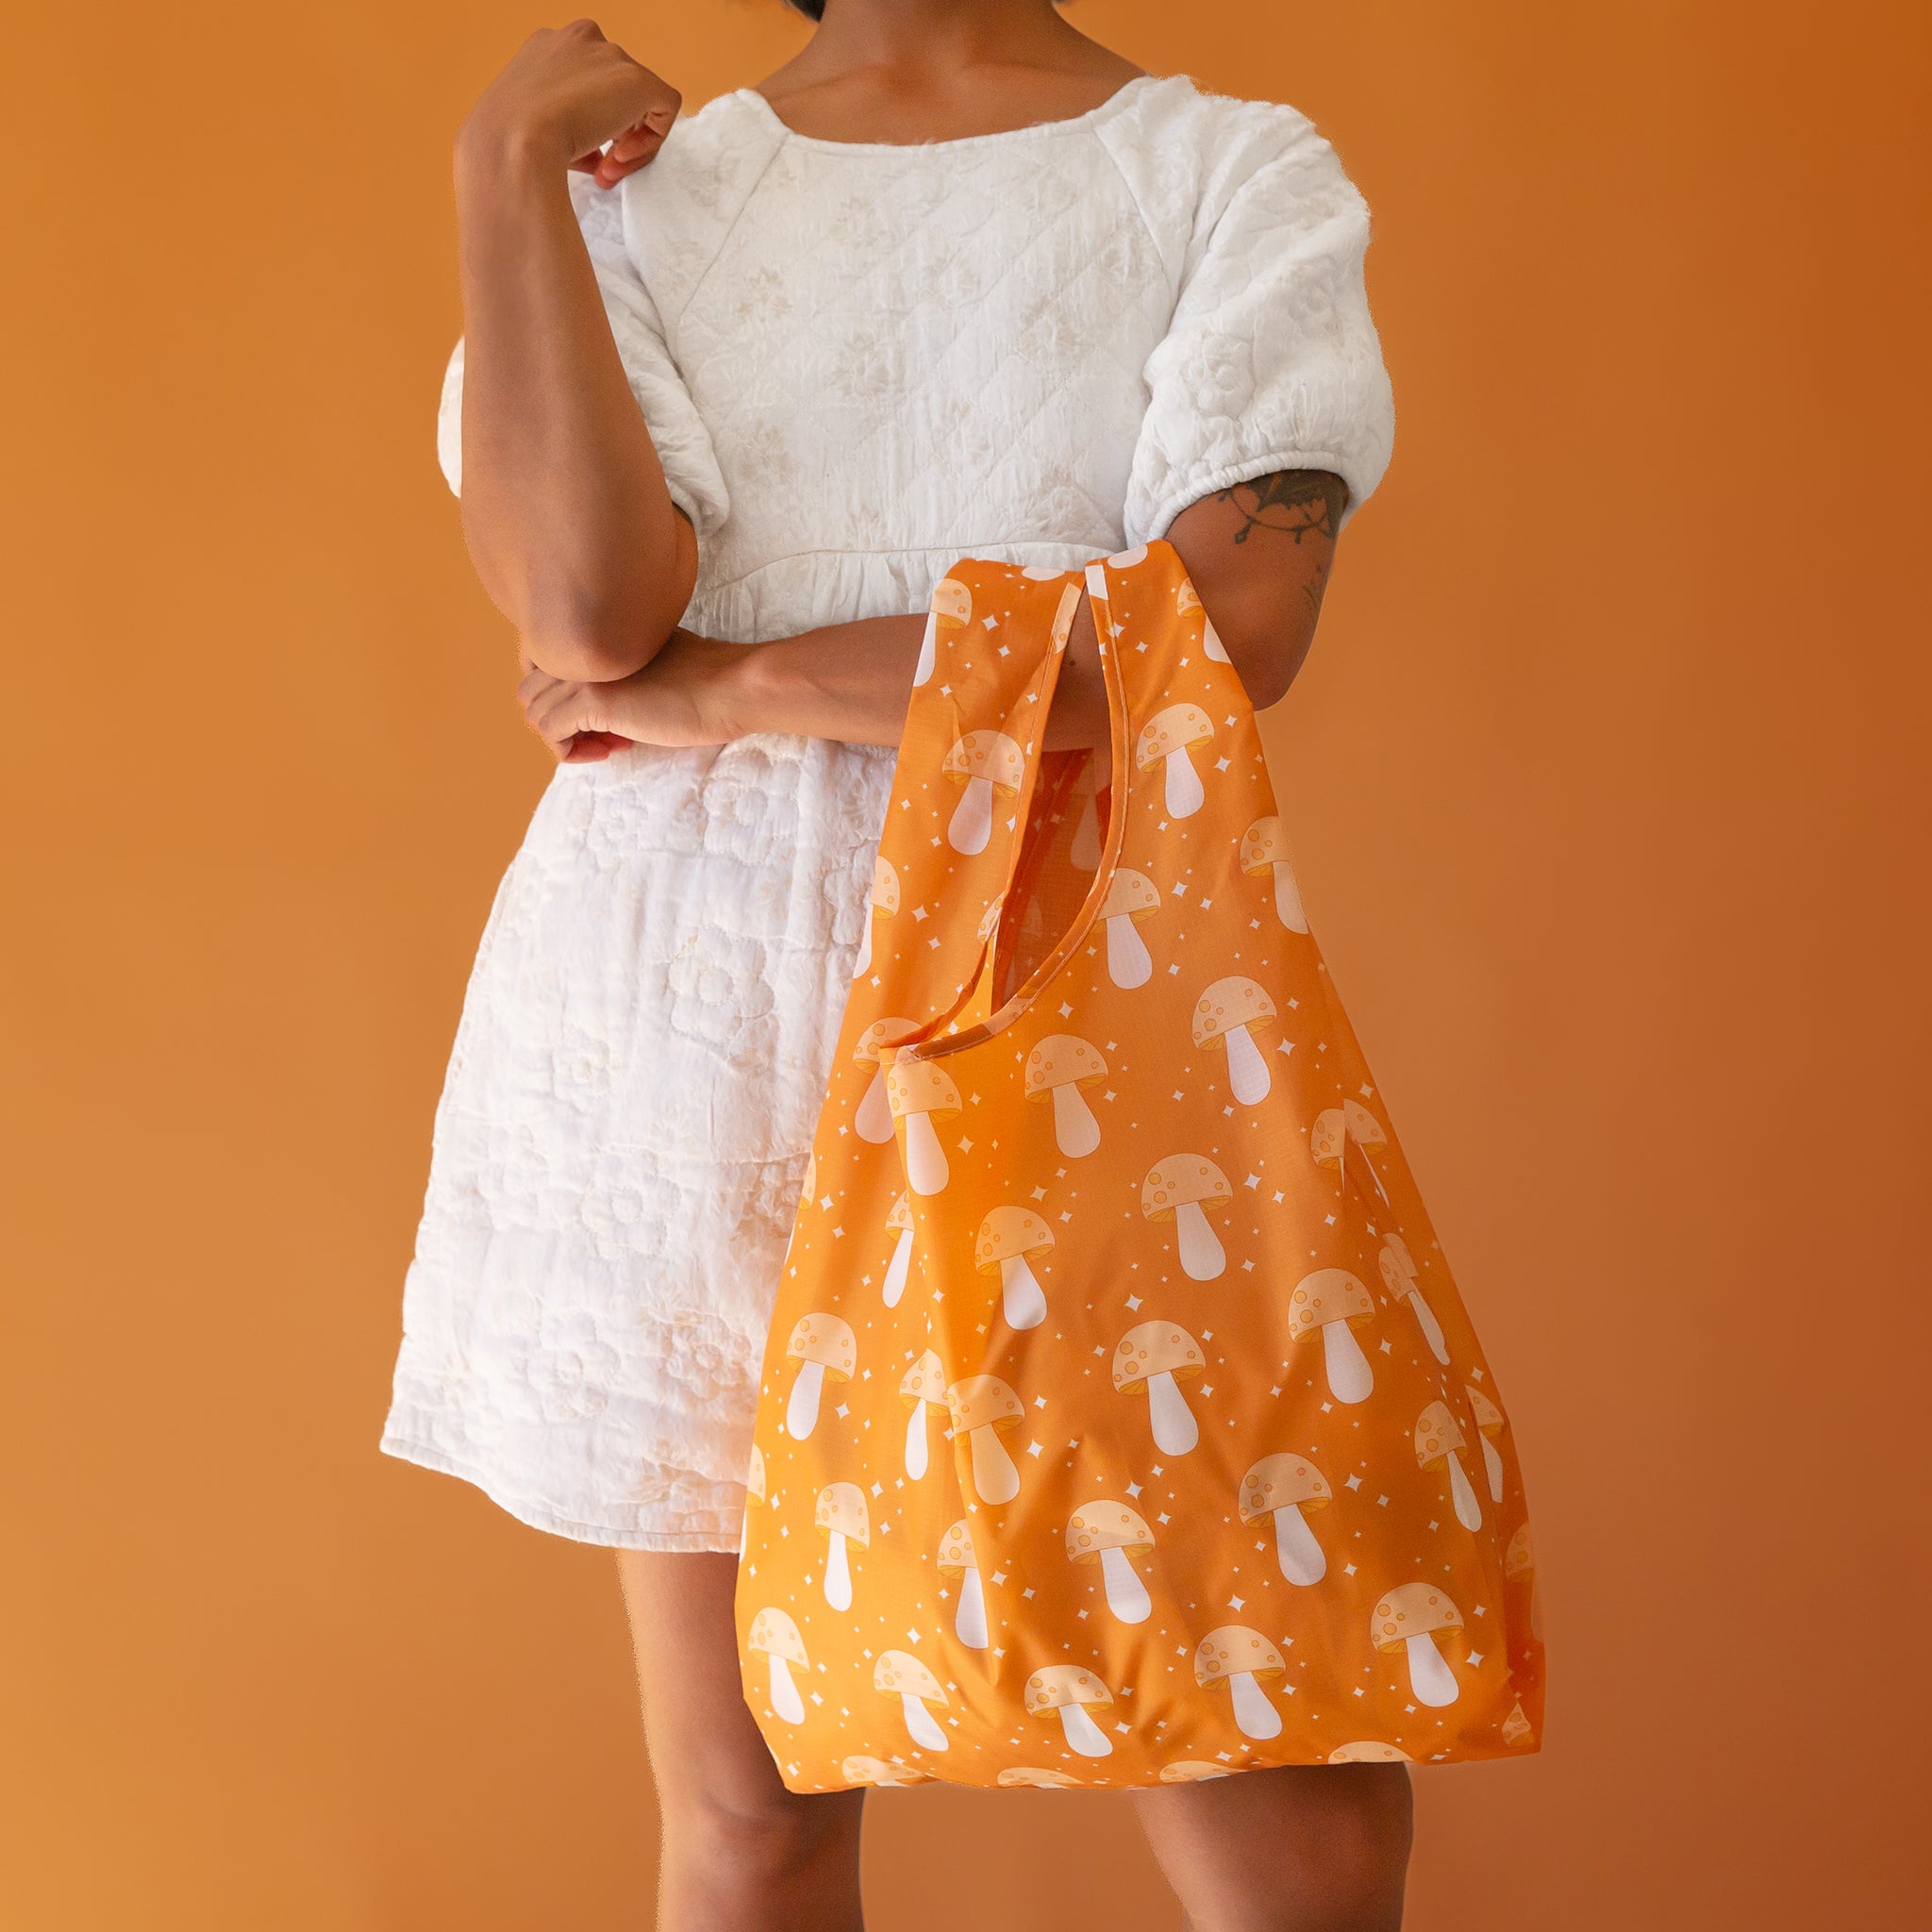 An orange nylon bag with a mushroom and twinkle star print.